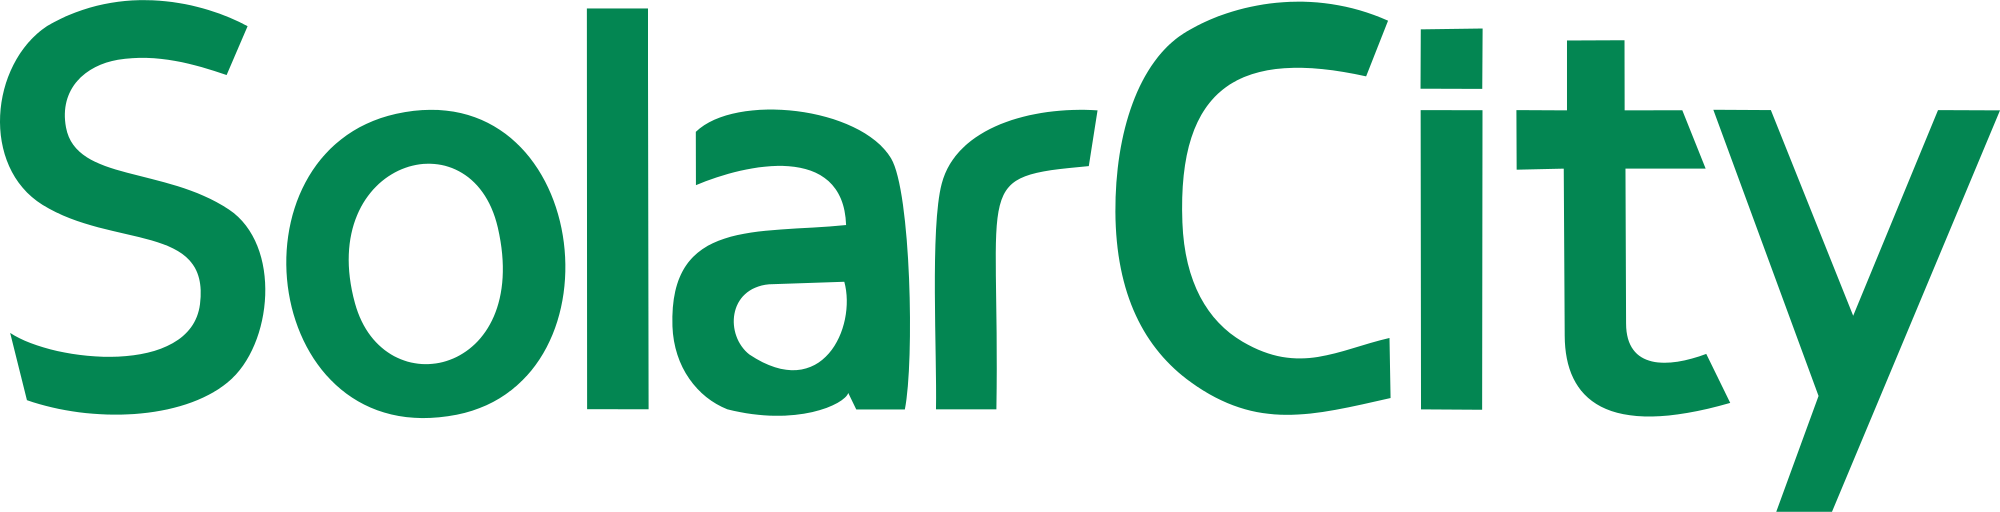 SolarCity Corp Logo - SolarCity Corporation